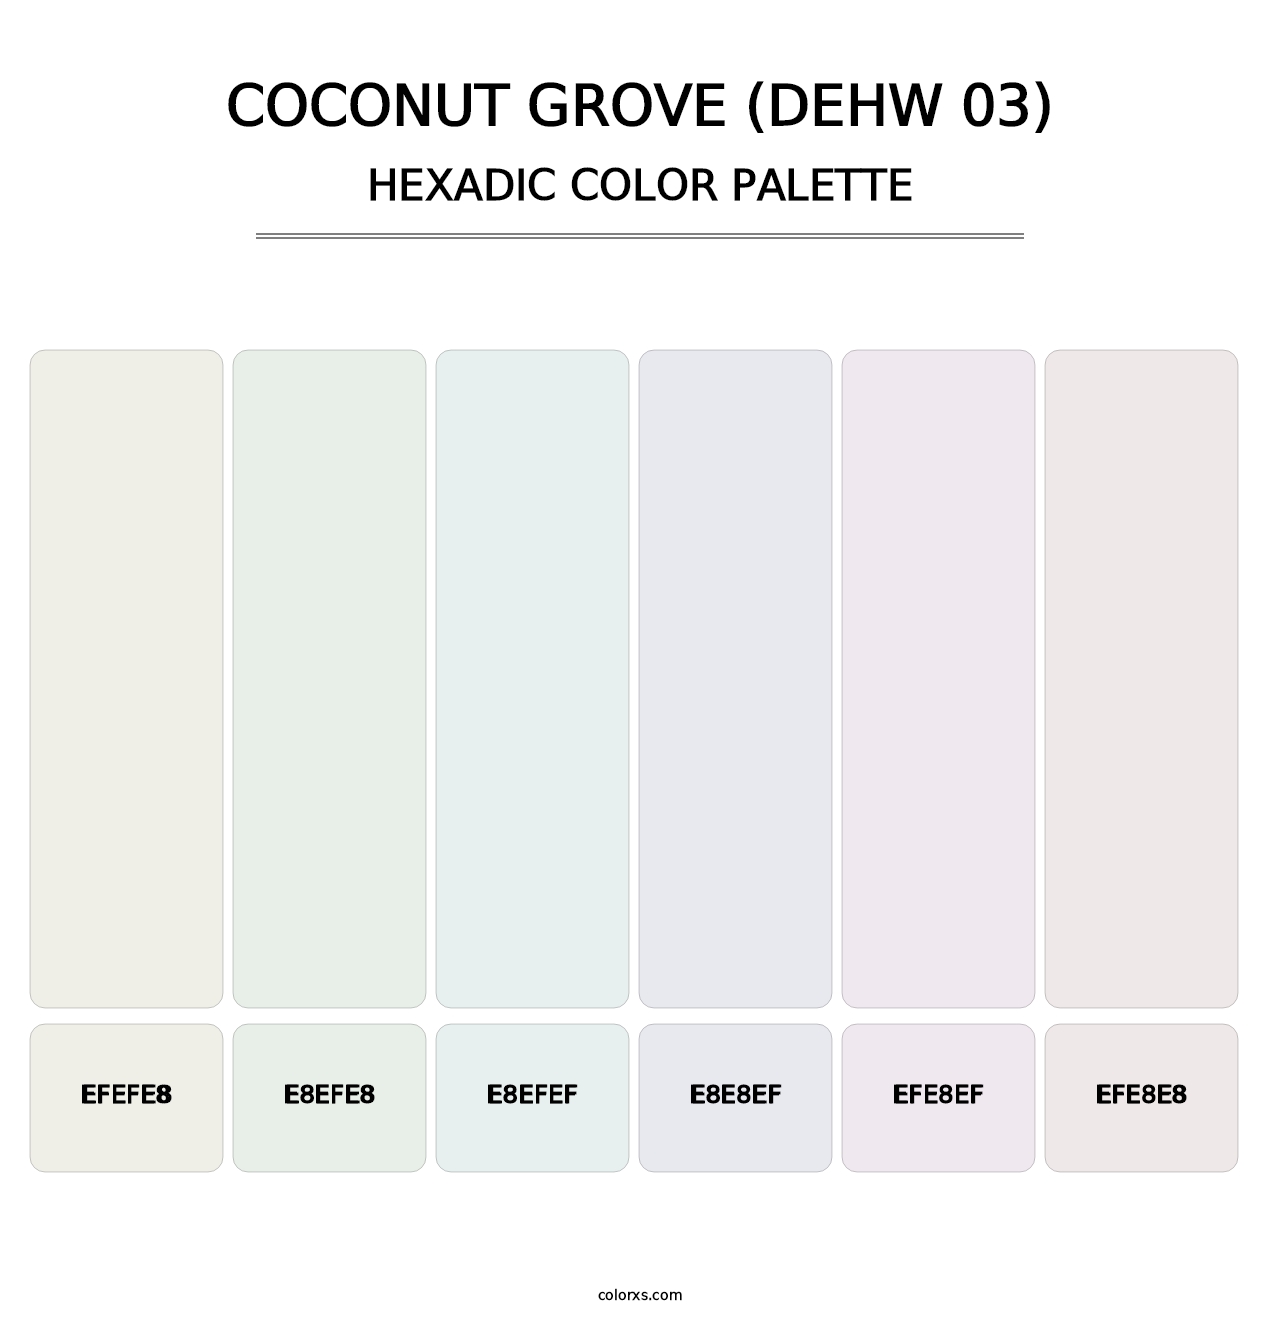 Coconut Grove (DEHW 03) - Hexadic Color Palette